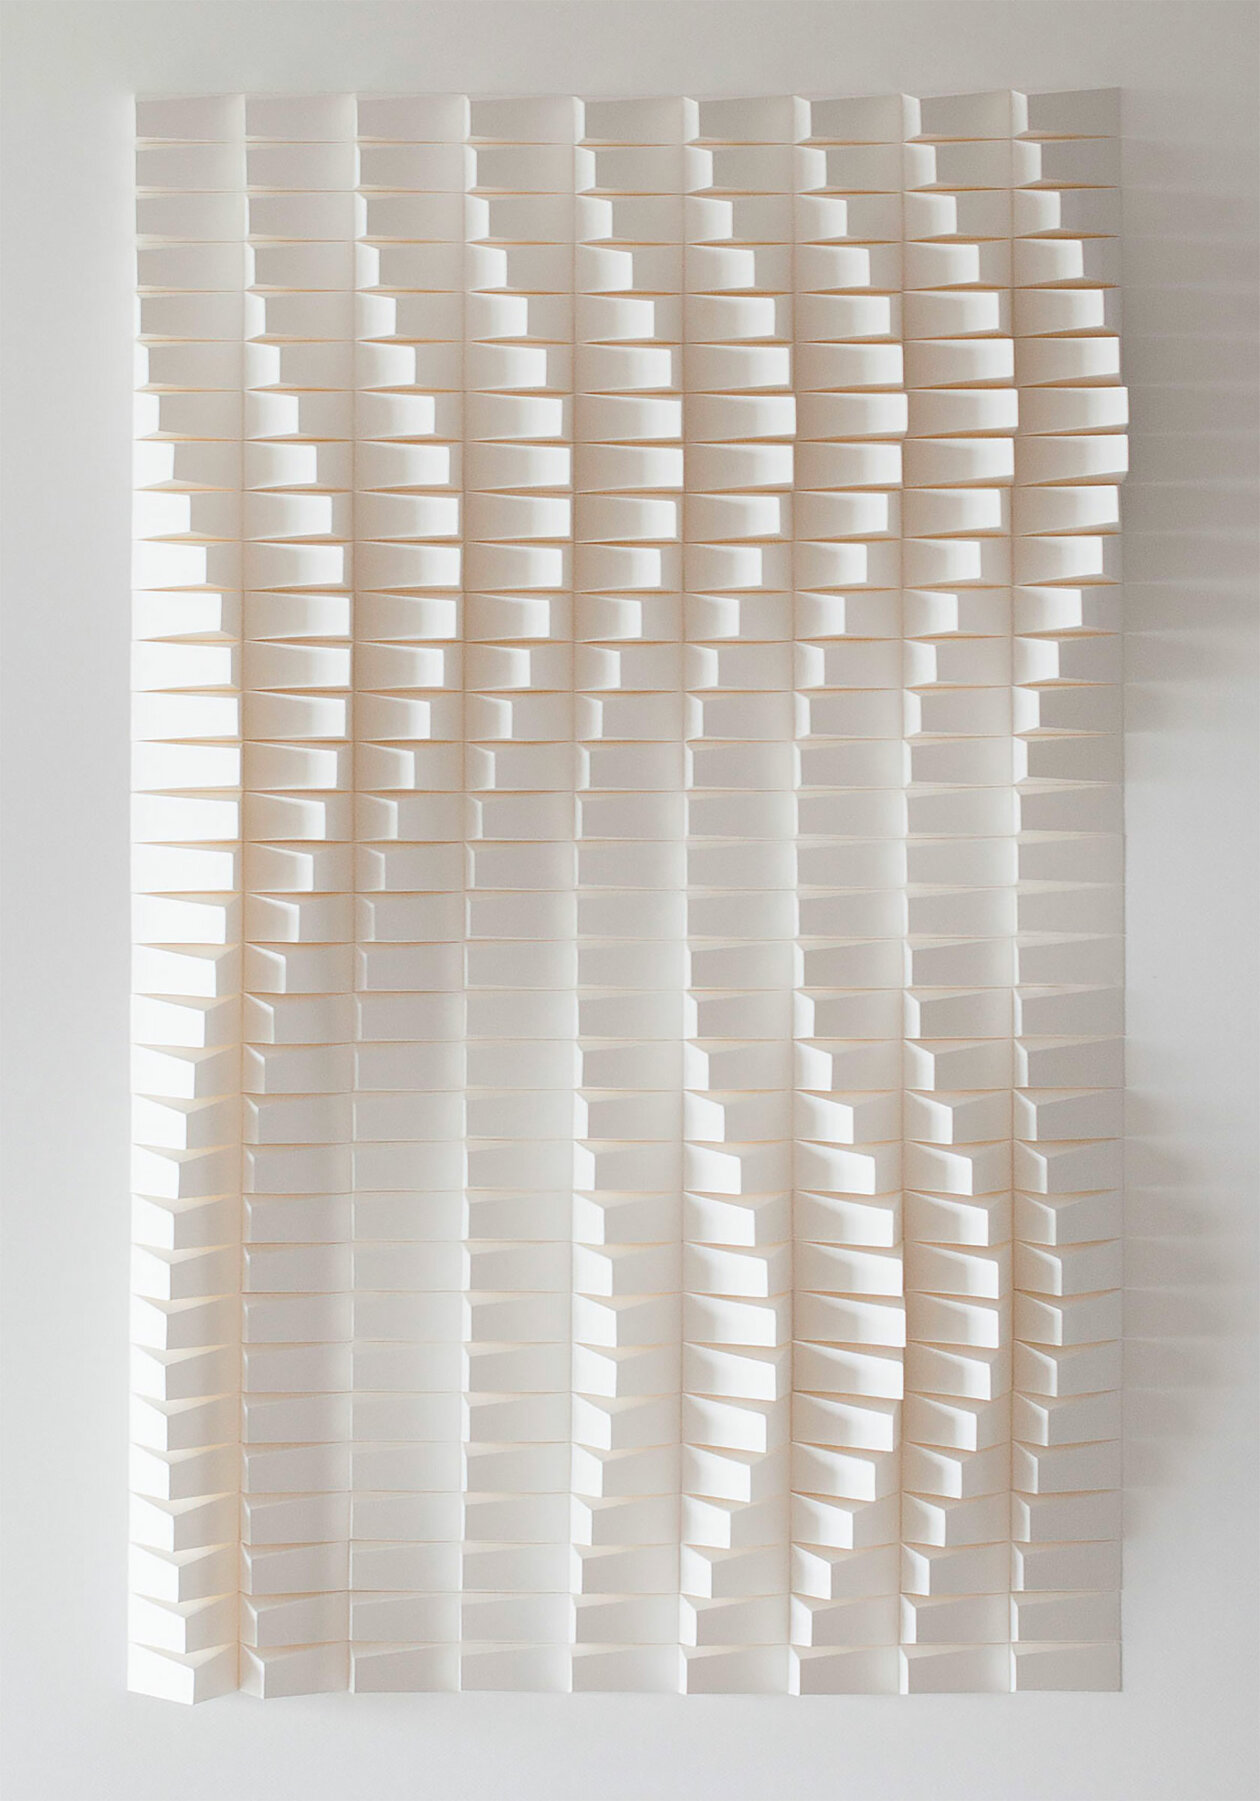 Origami Inspired Geometric Paper Sculptures By Anna Kruhelska (8)